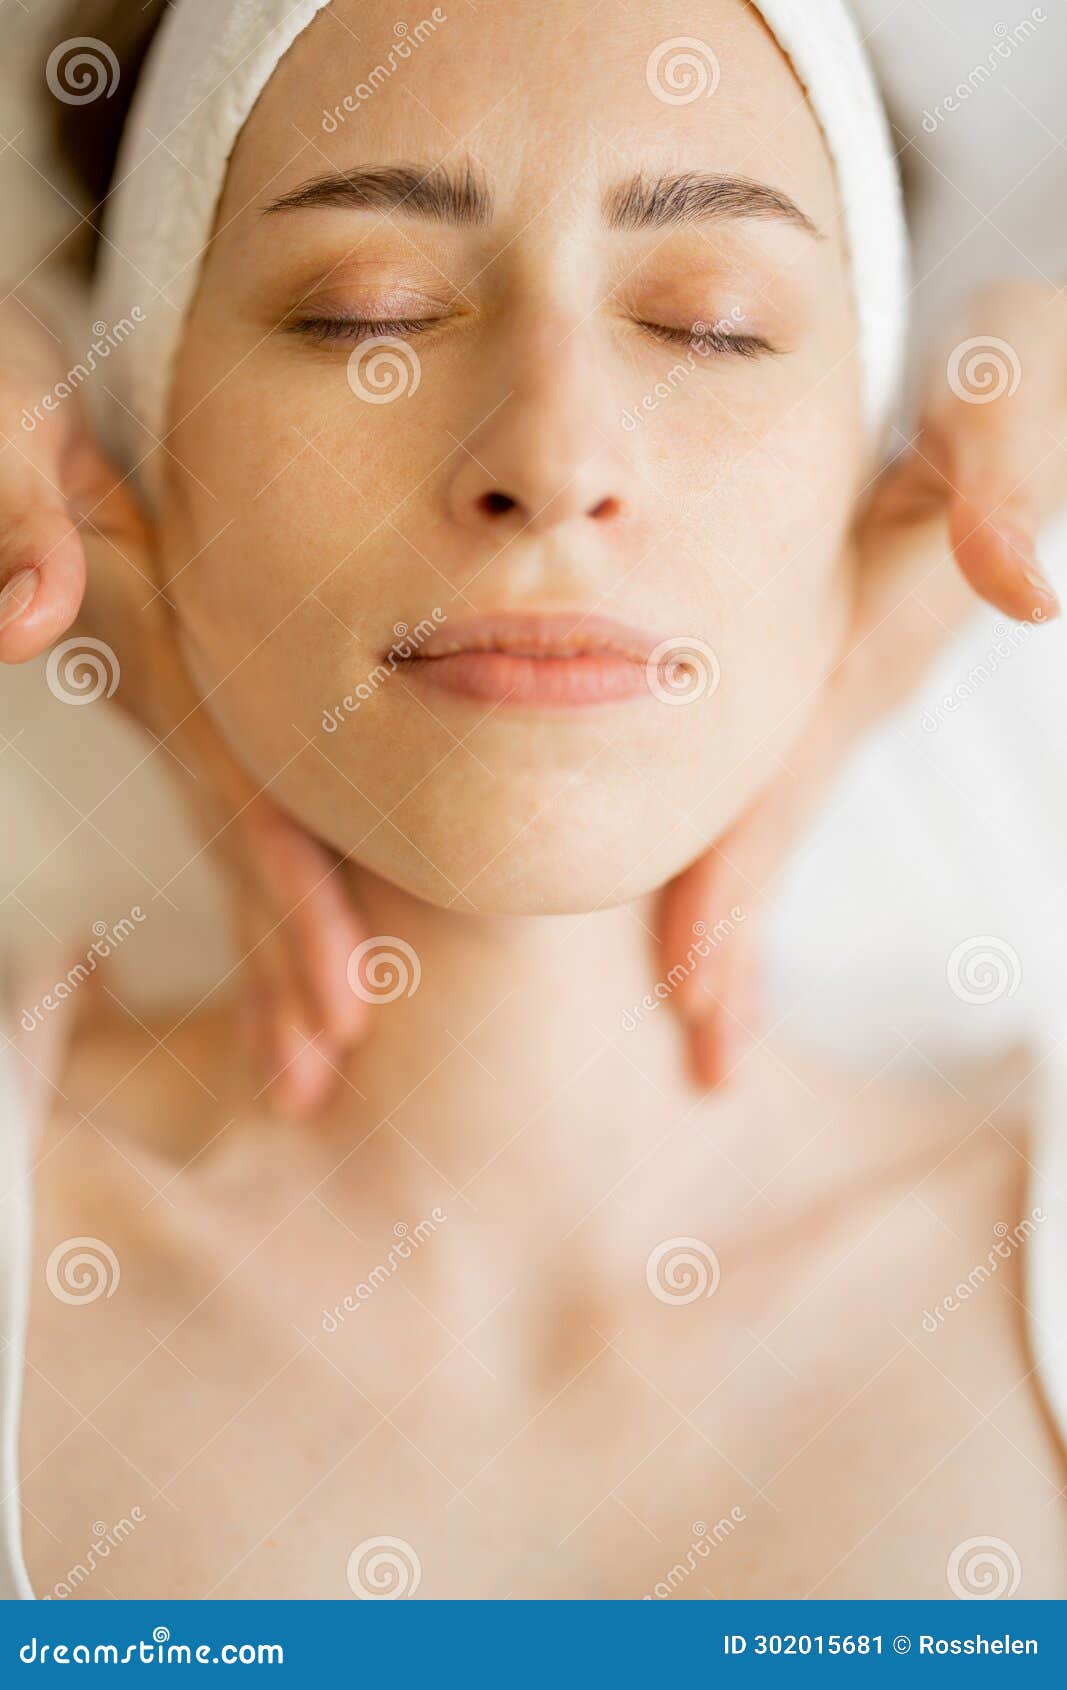 Woman Receiving Relaxing Facial Massage Stock Image Image Of Face Massaging 302015681